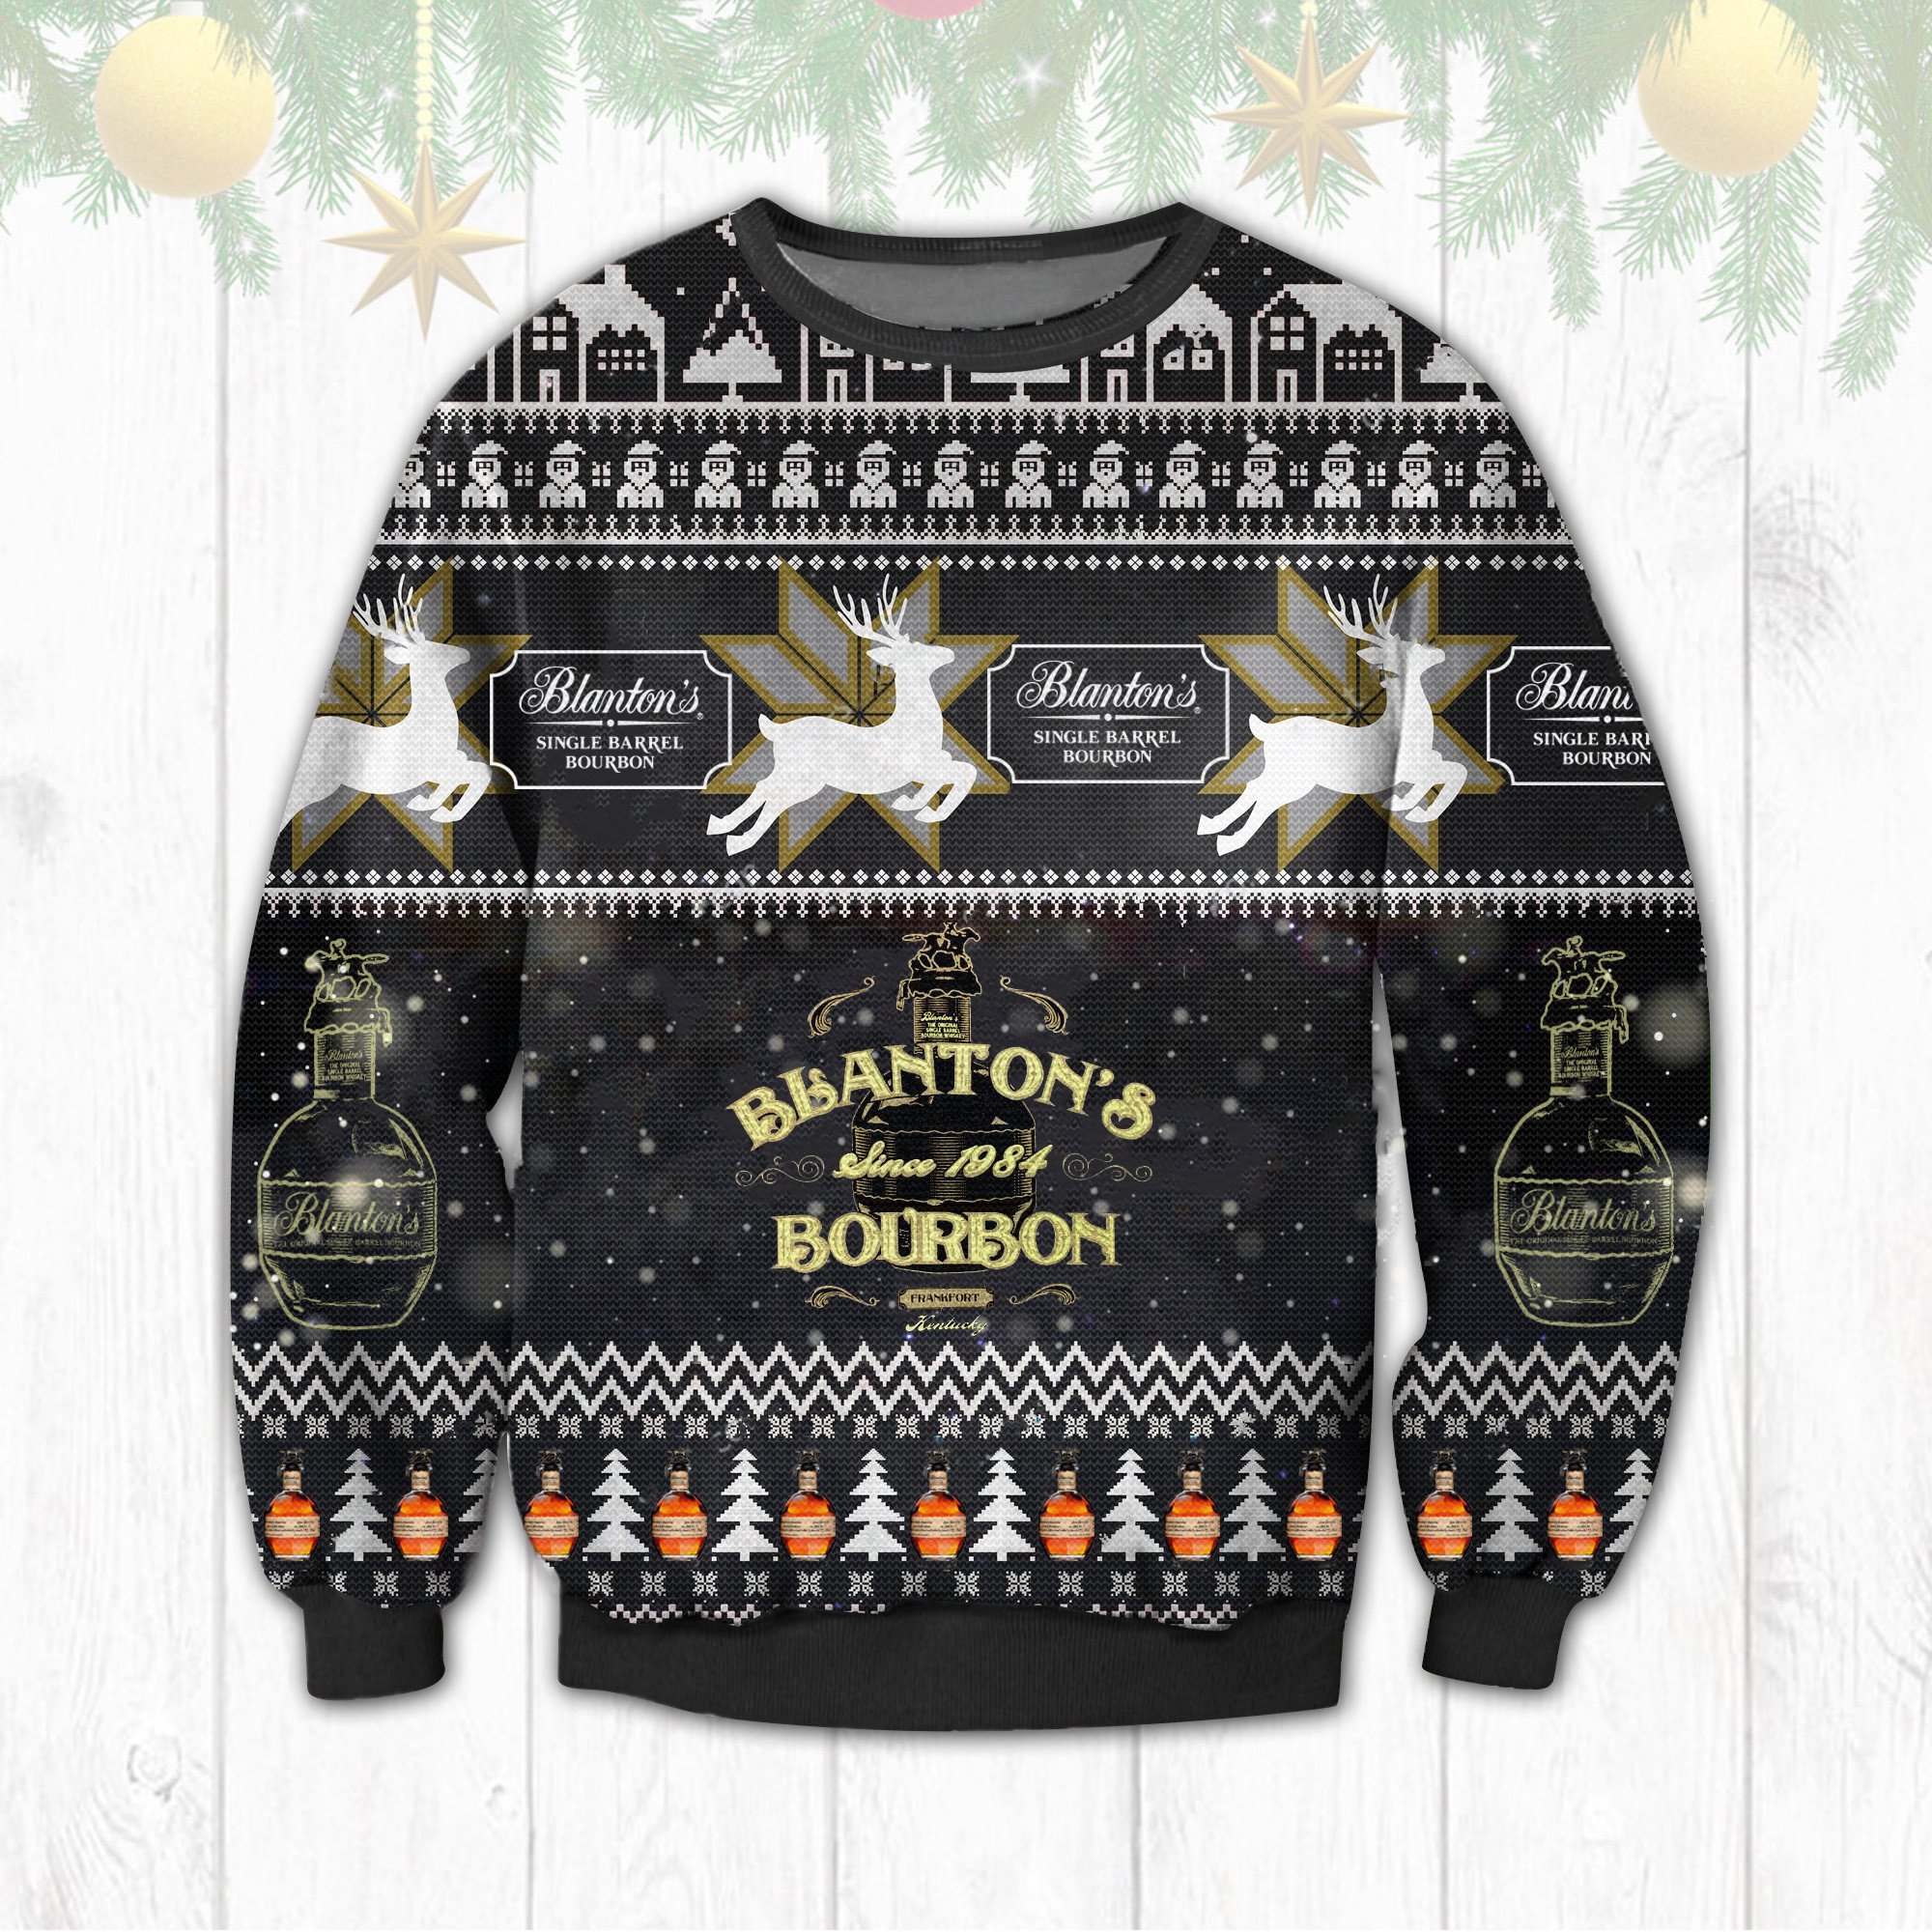 HOT Blanton's Bourbon Since 1984 ugly Christmas sweater 8